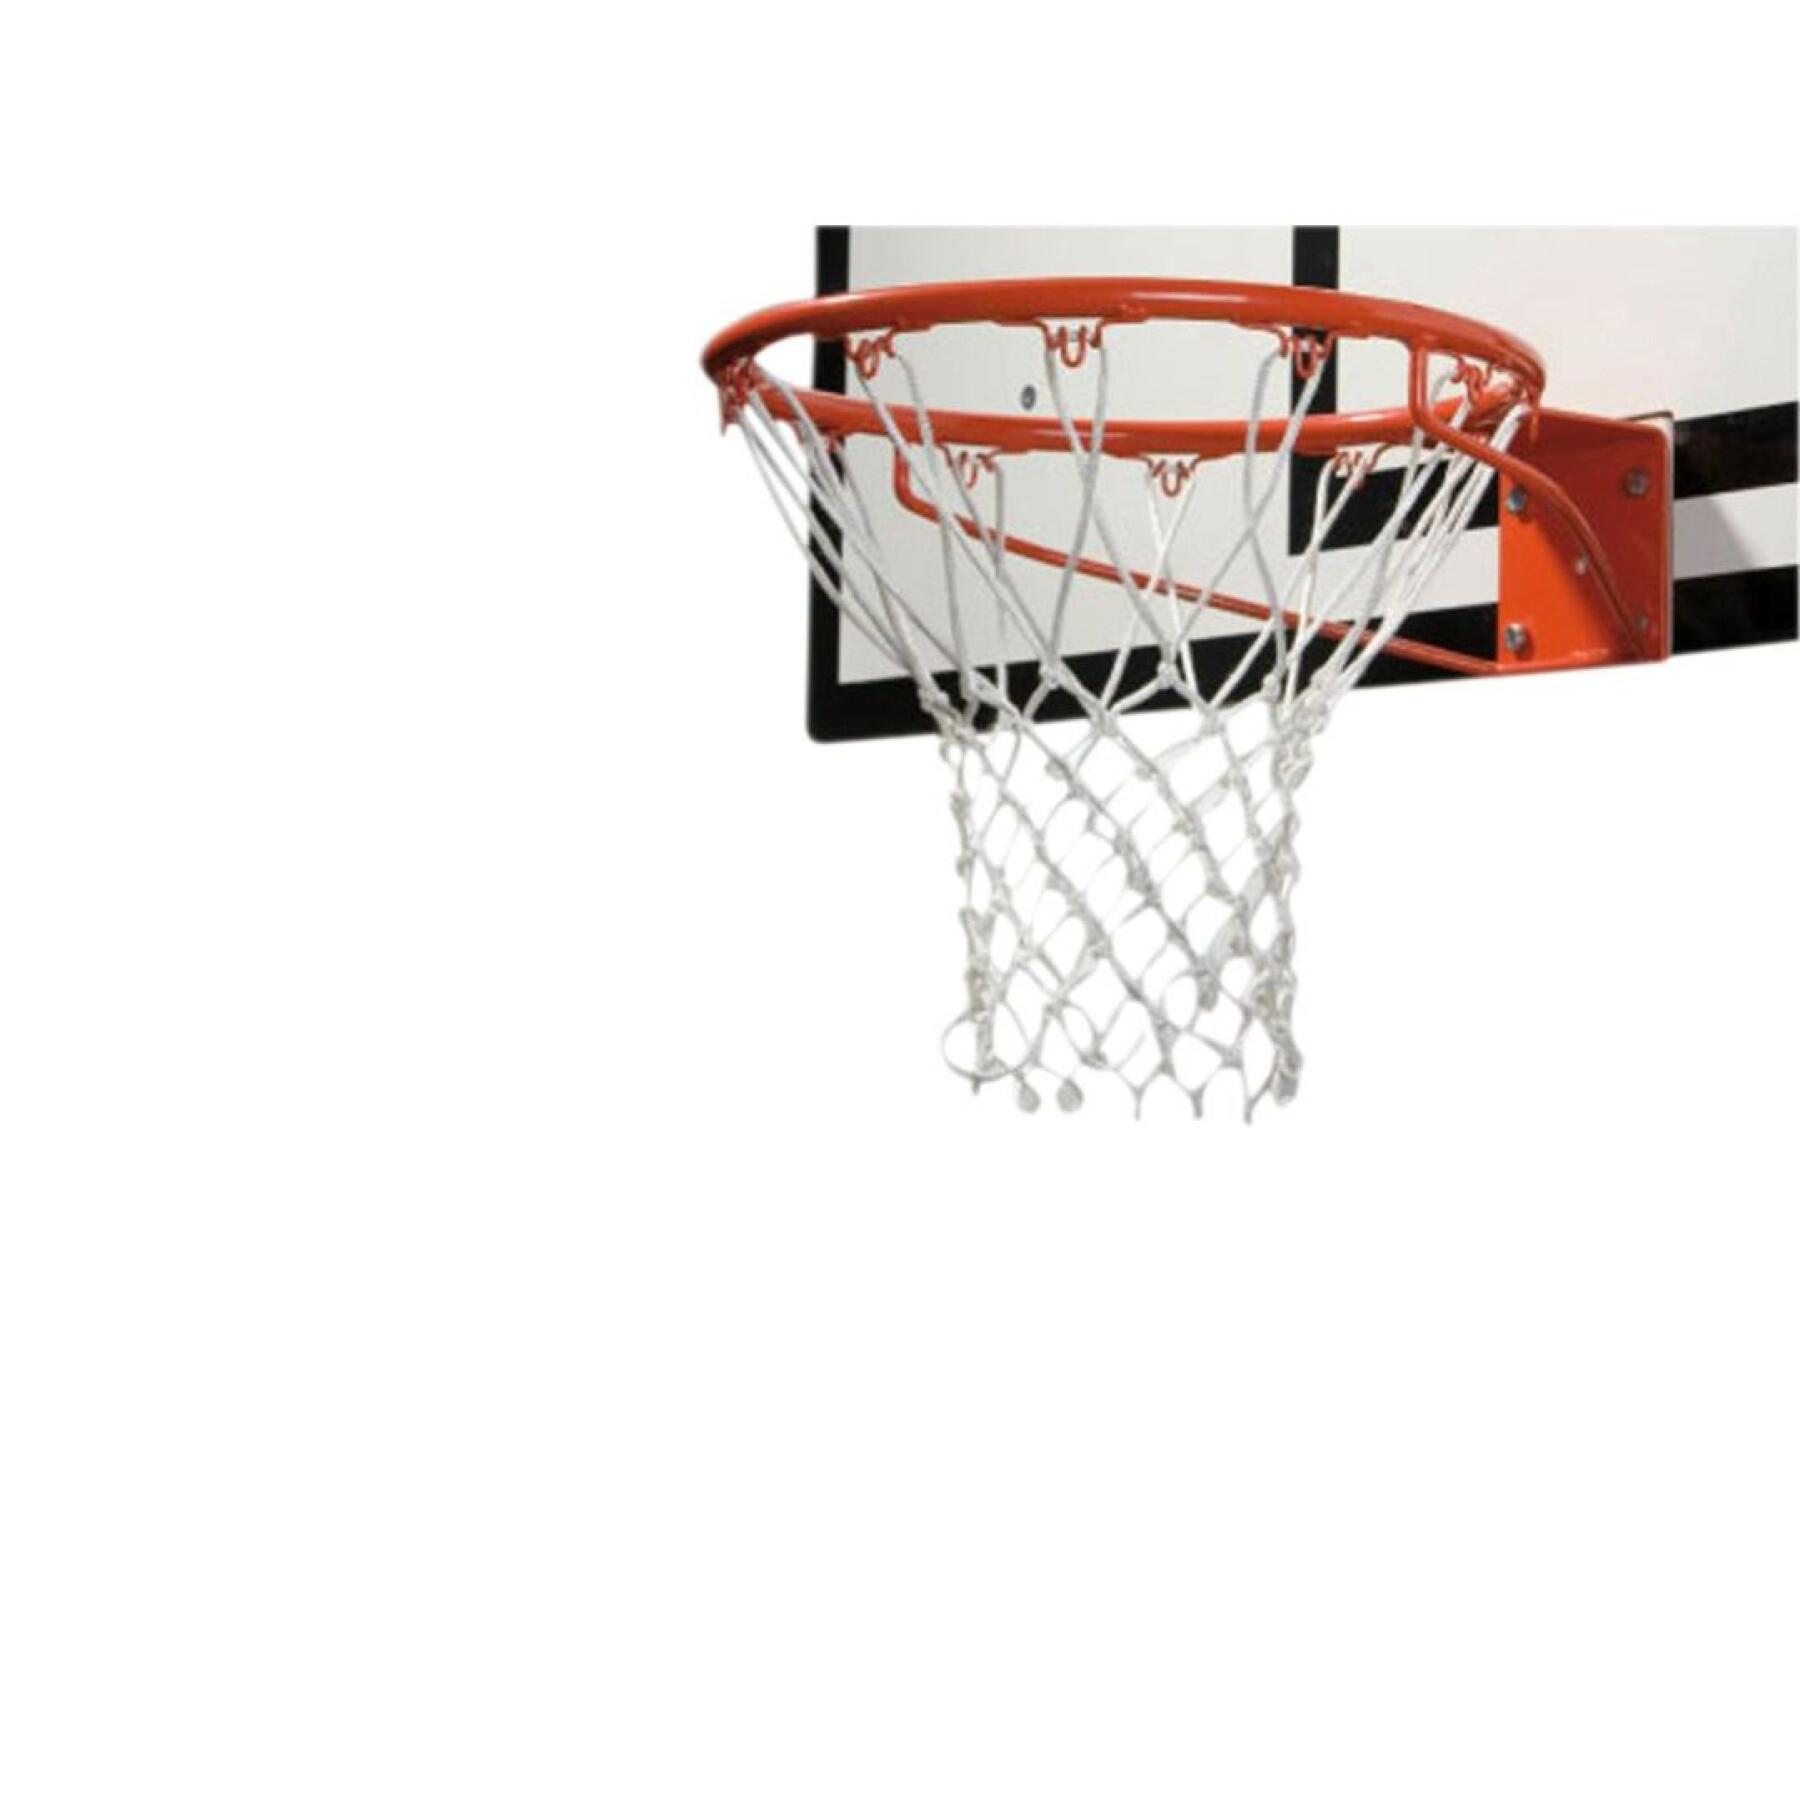 Basketball net Tanga sports